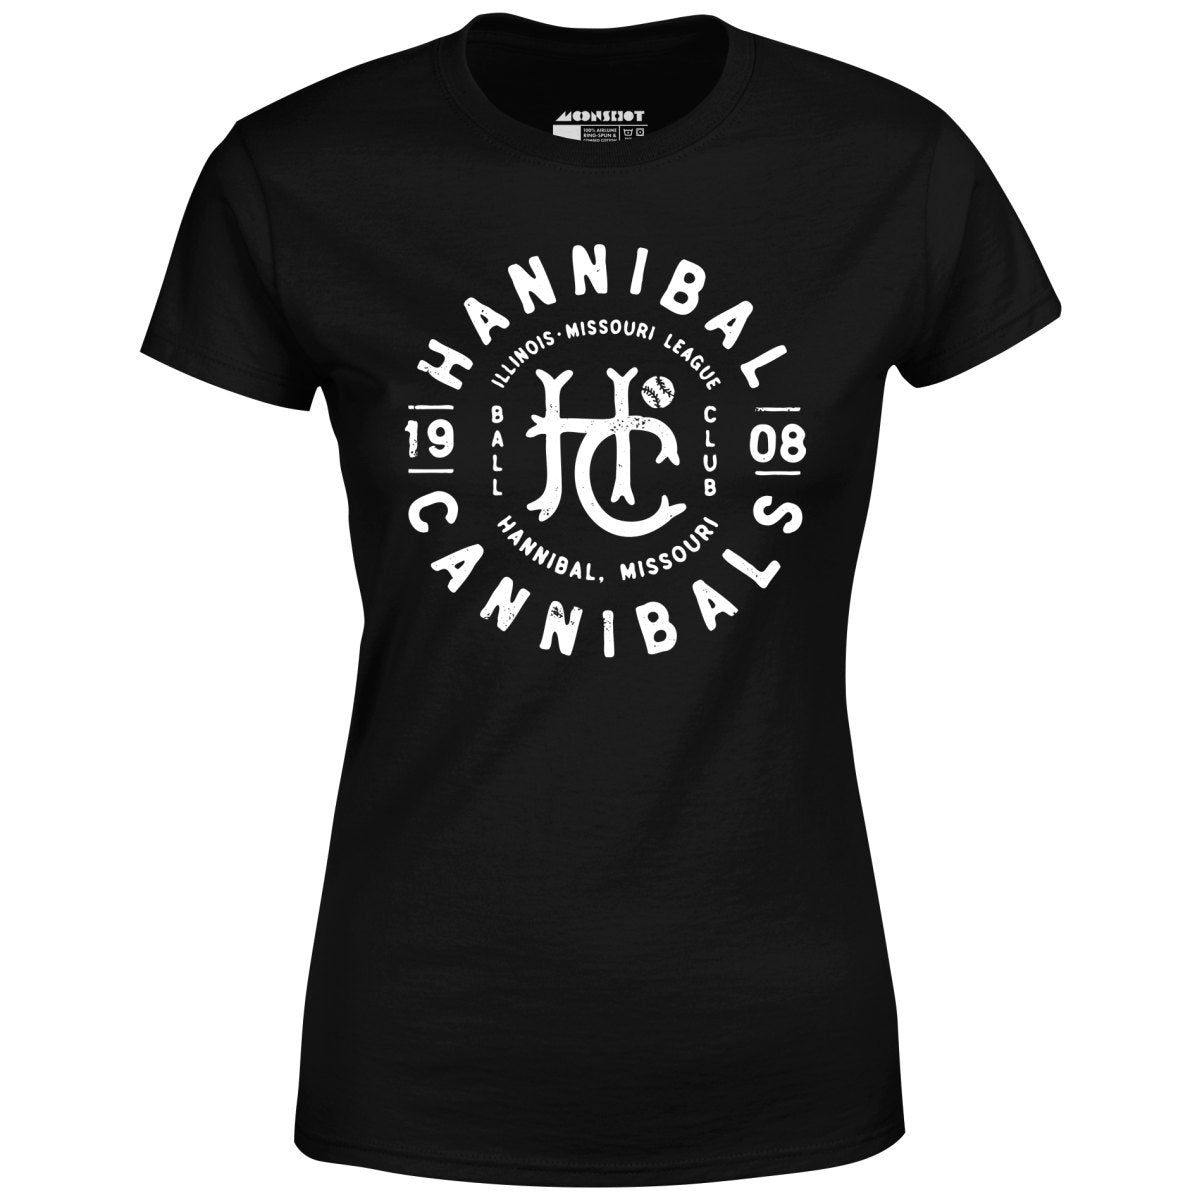 Hannibal Cannibals - Missouri - Vintage Defunct Baseball Teams - Women's T-Shirt